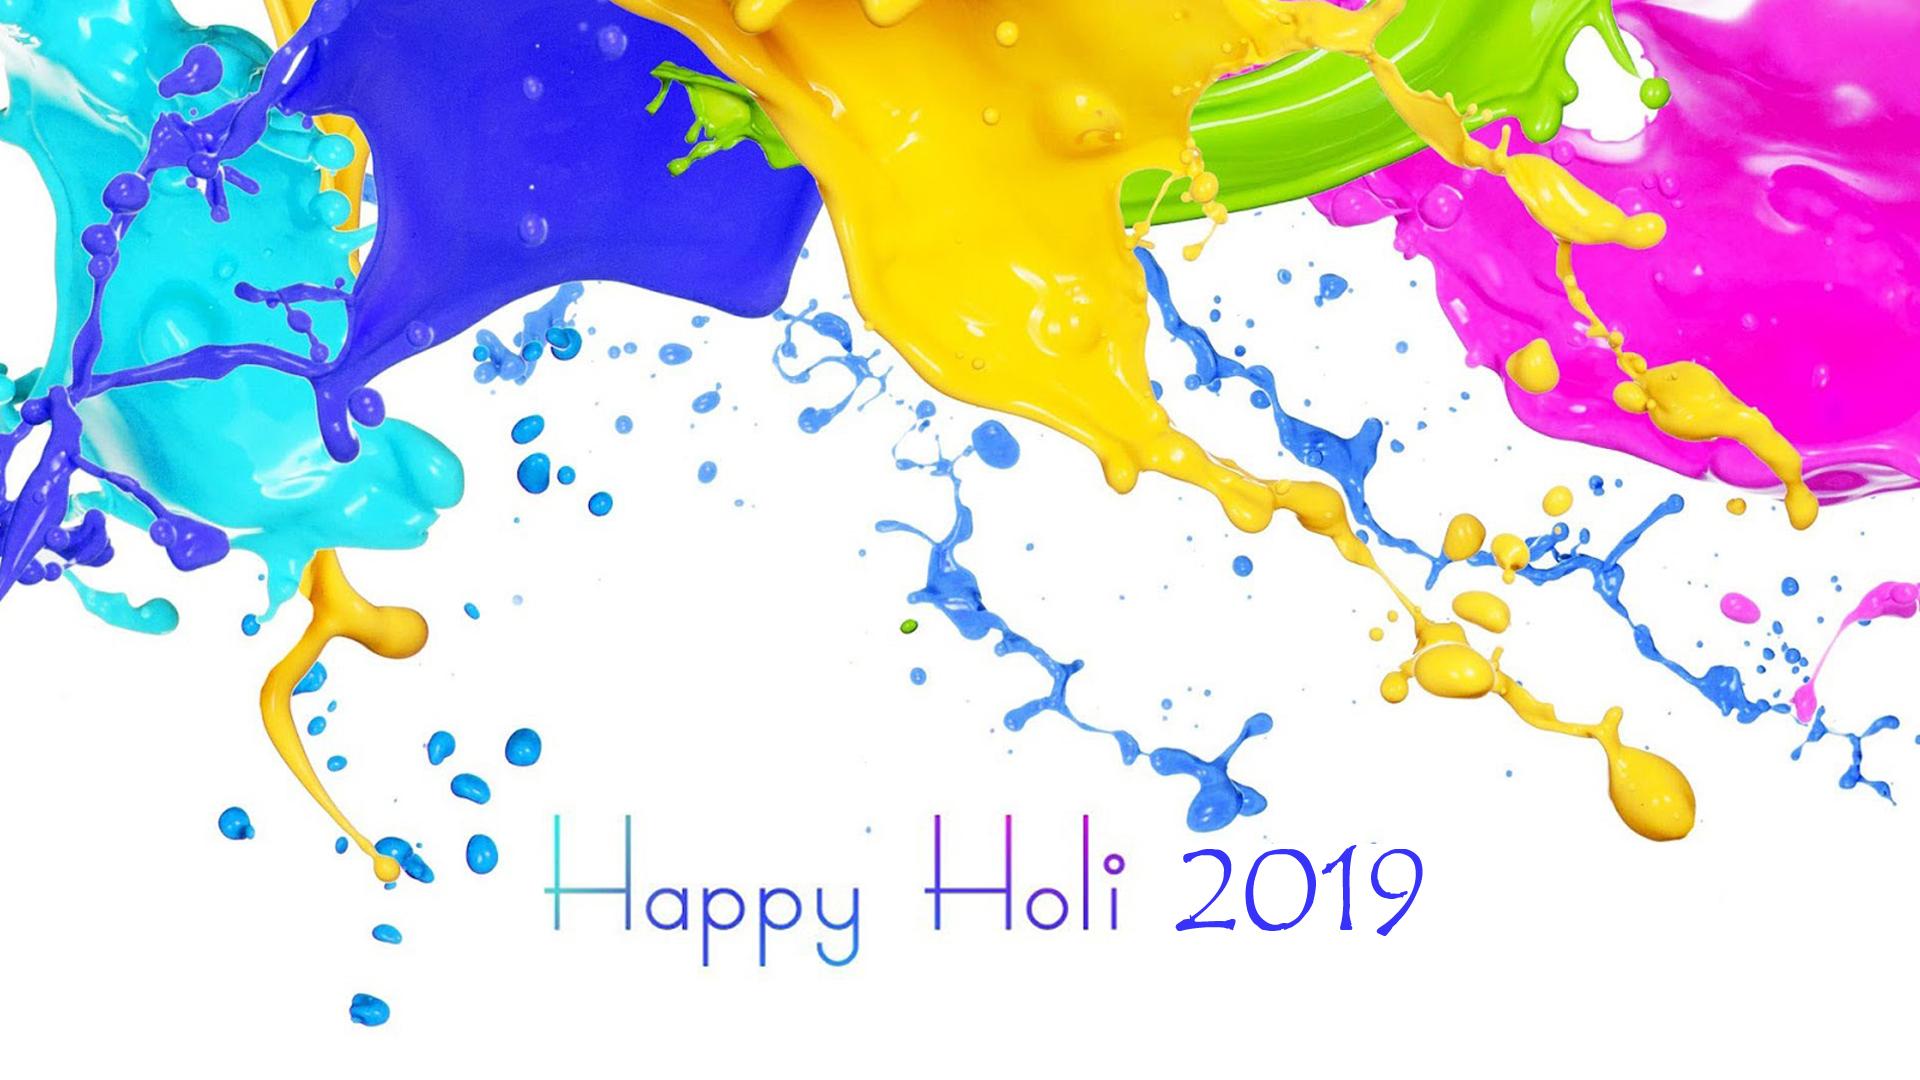 New Wallpaper for Happy Holi 2019 in HD Wallpaper. Wallpaper